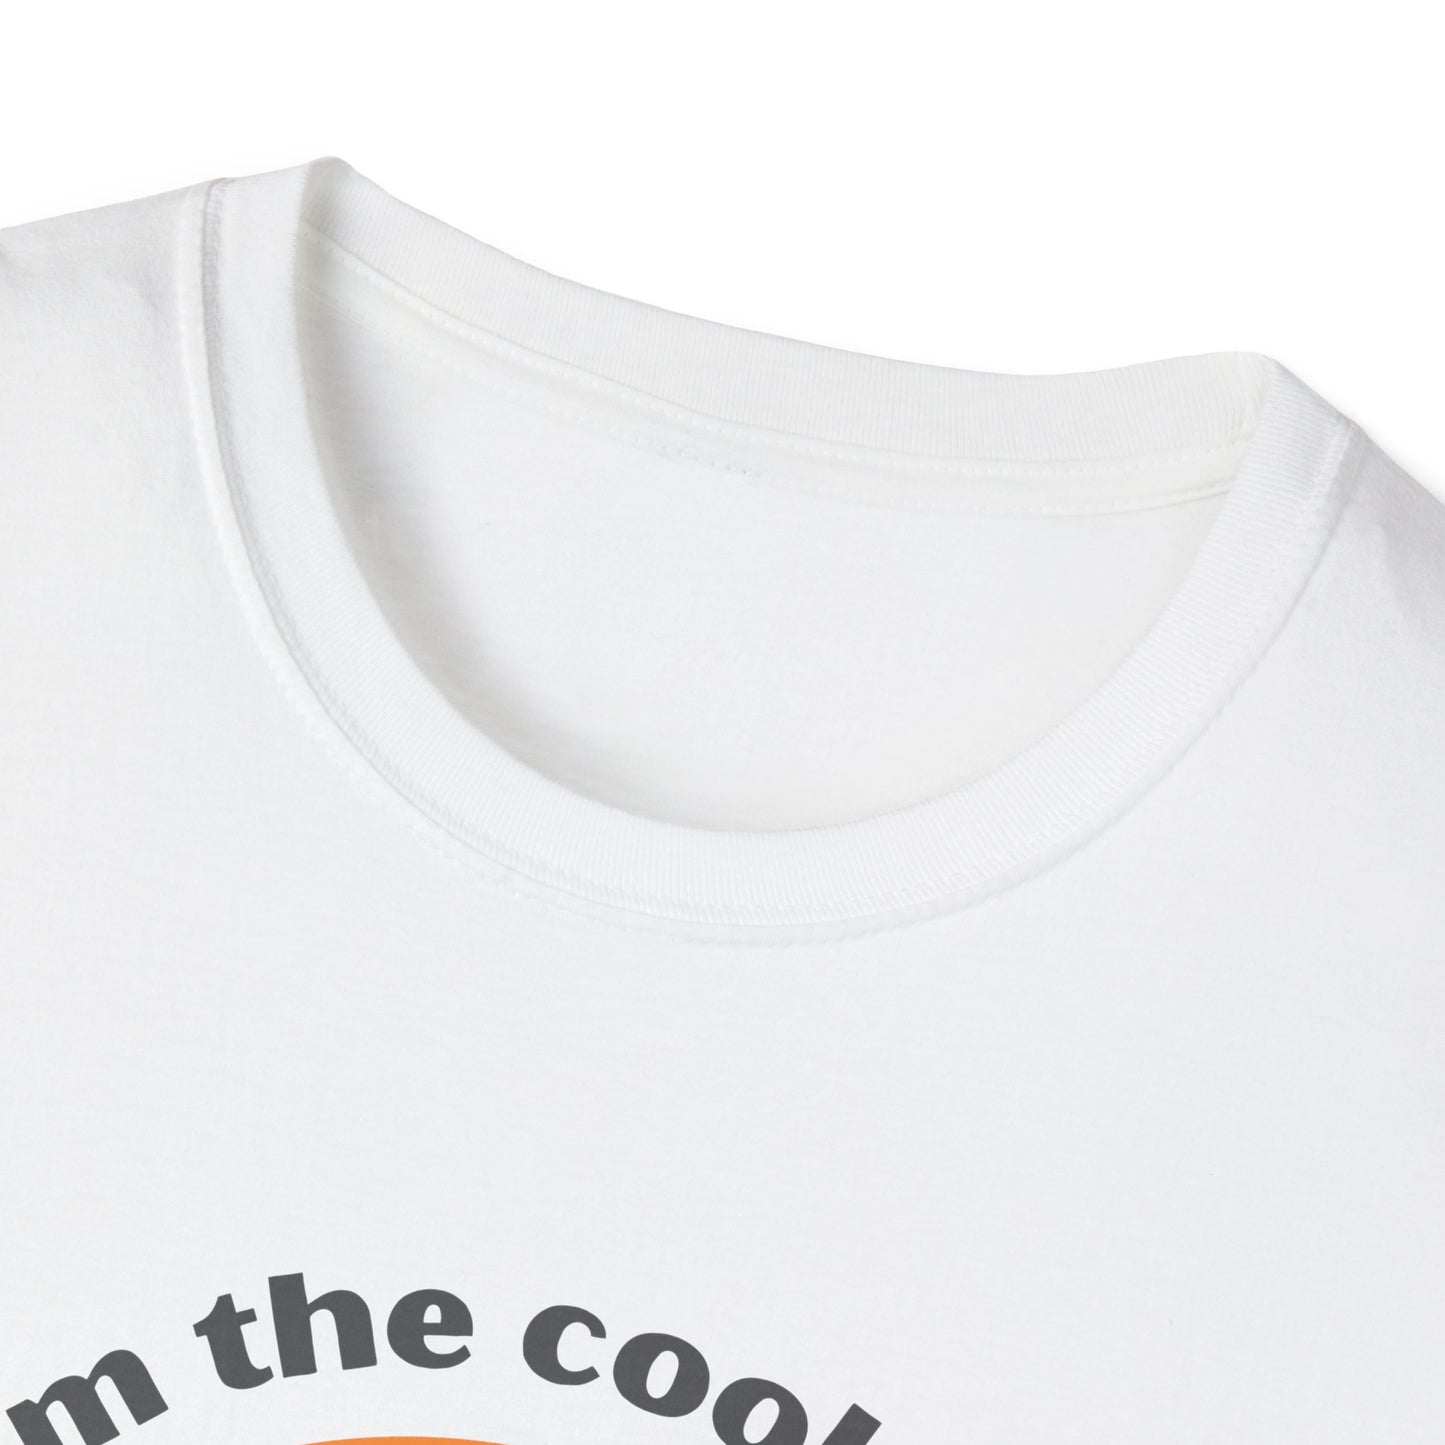 Modern Family t-shirt - "I'm the cool Dad" Phil Dunphy fan t-shirt - Modern Family fan gift